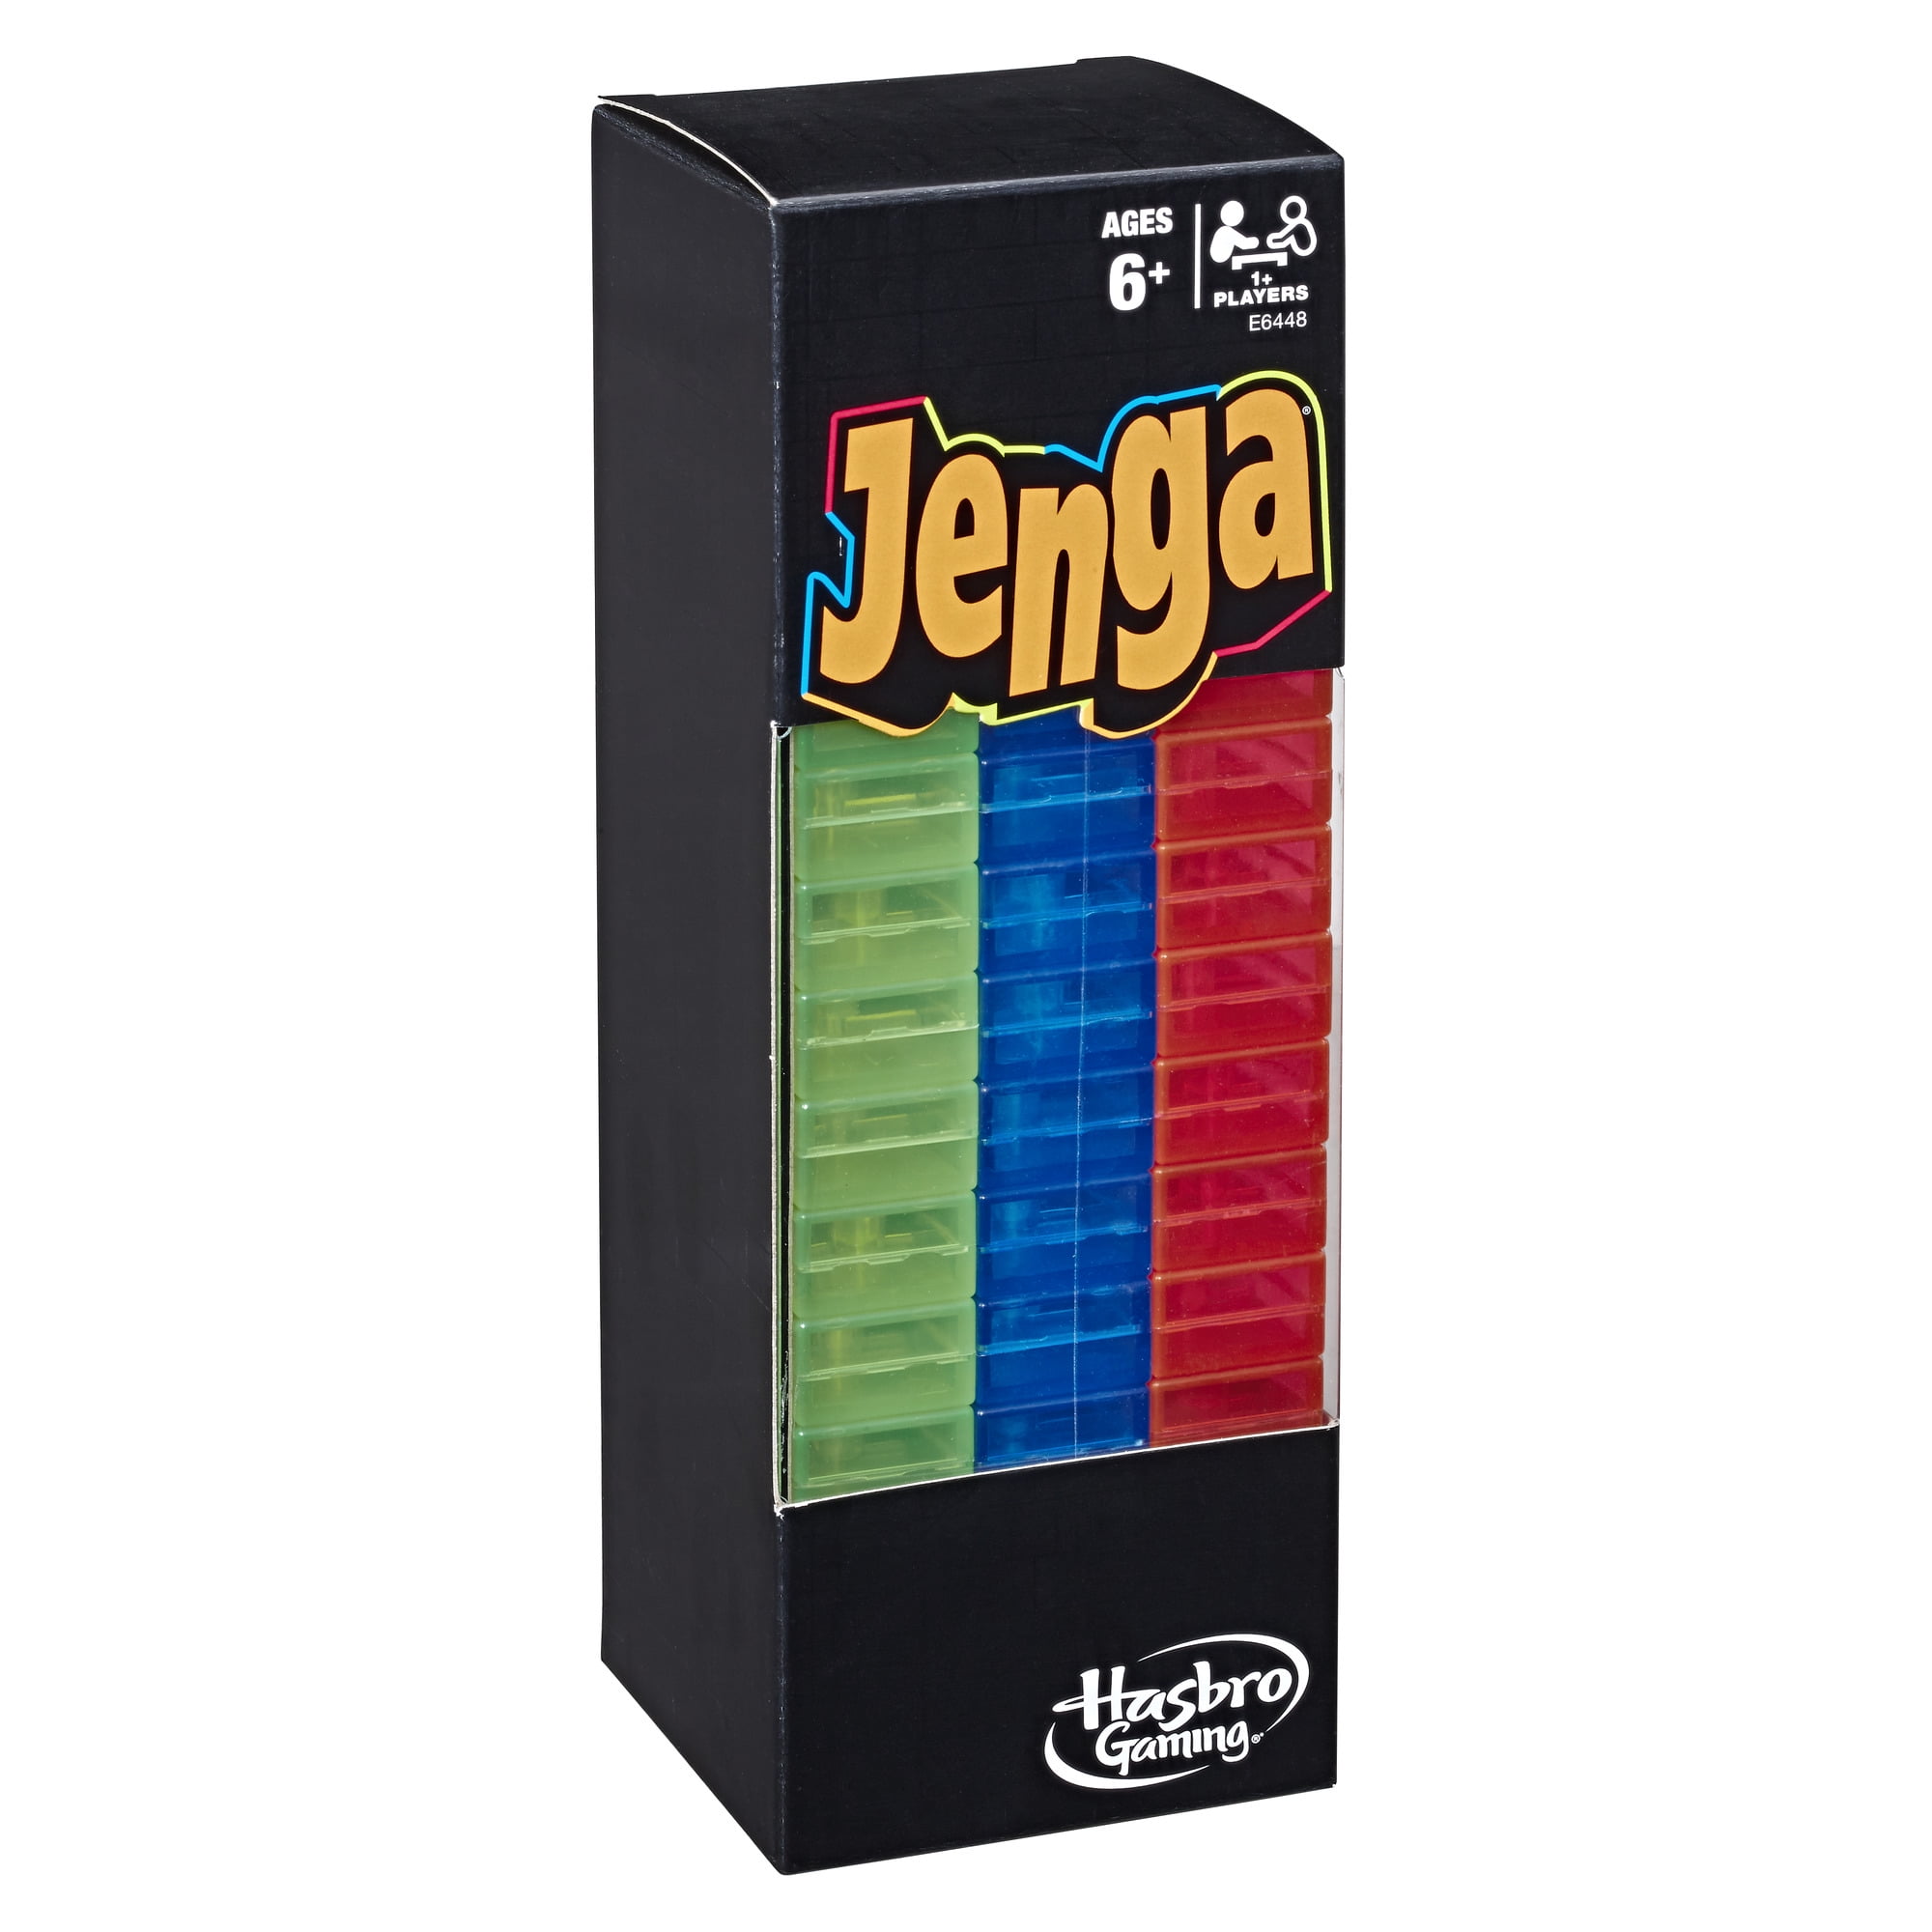 Classic Jenga Wood Block stacking Game Hasbro Gaming New